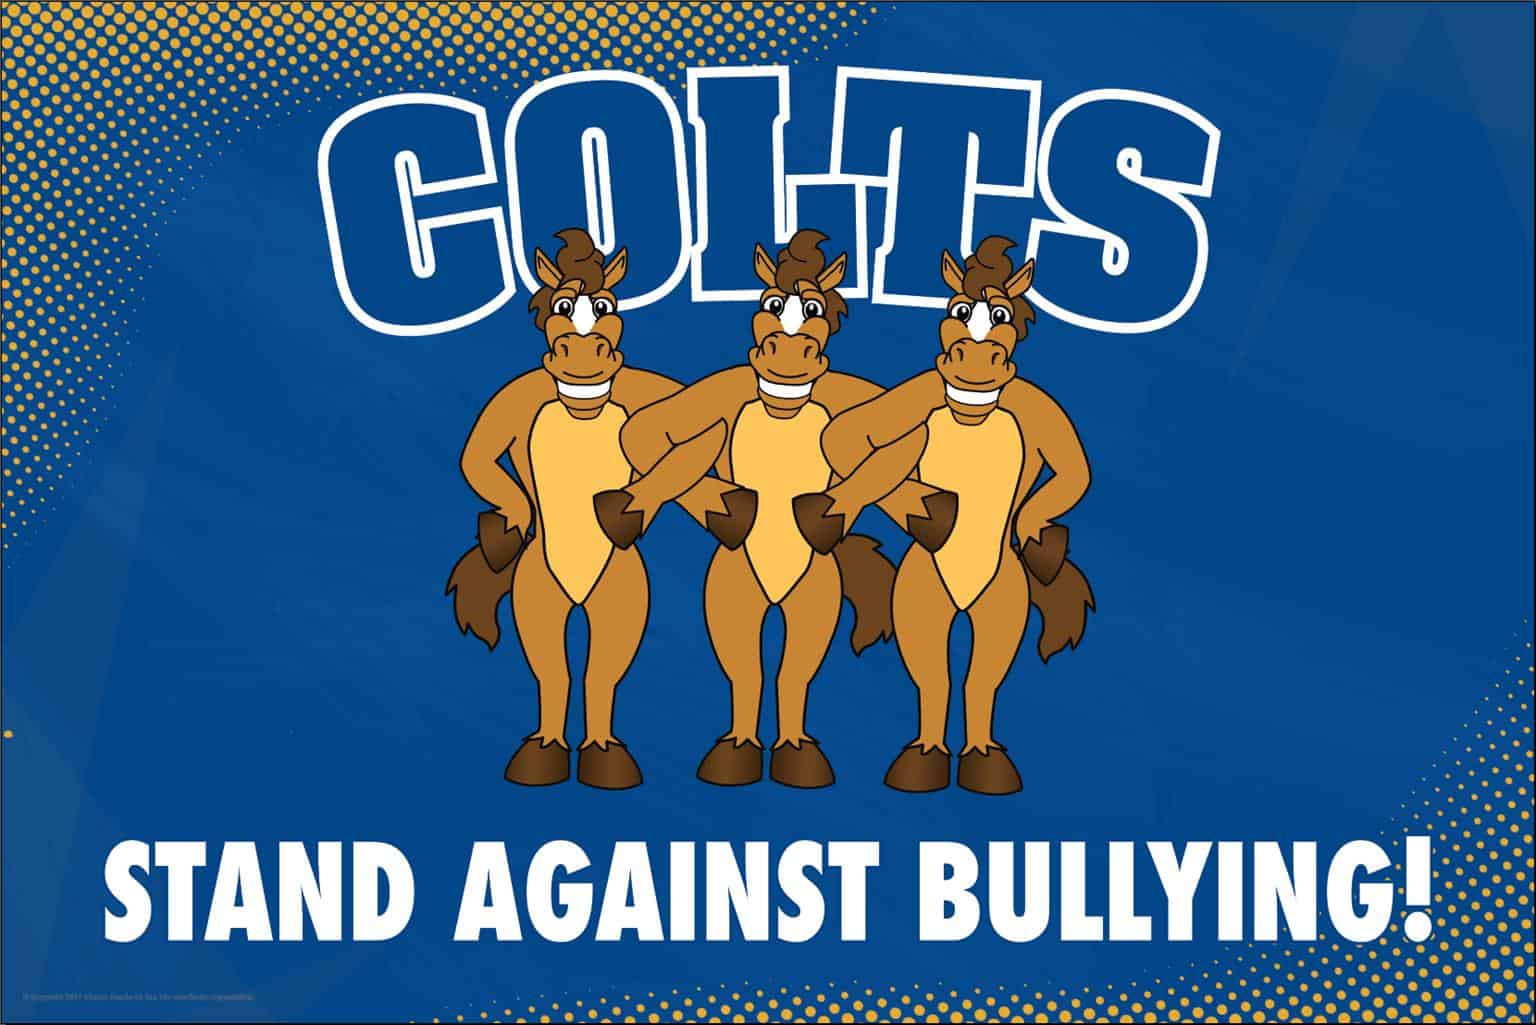 Anti Bullying Poster Colts